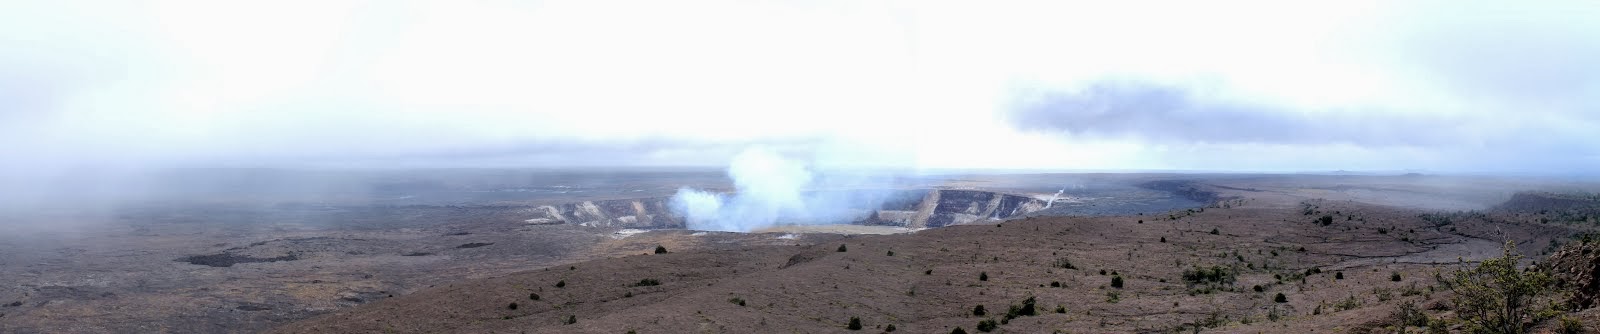 Kilauea volcano, Big Island, HI, USA